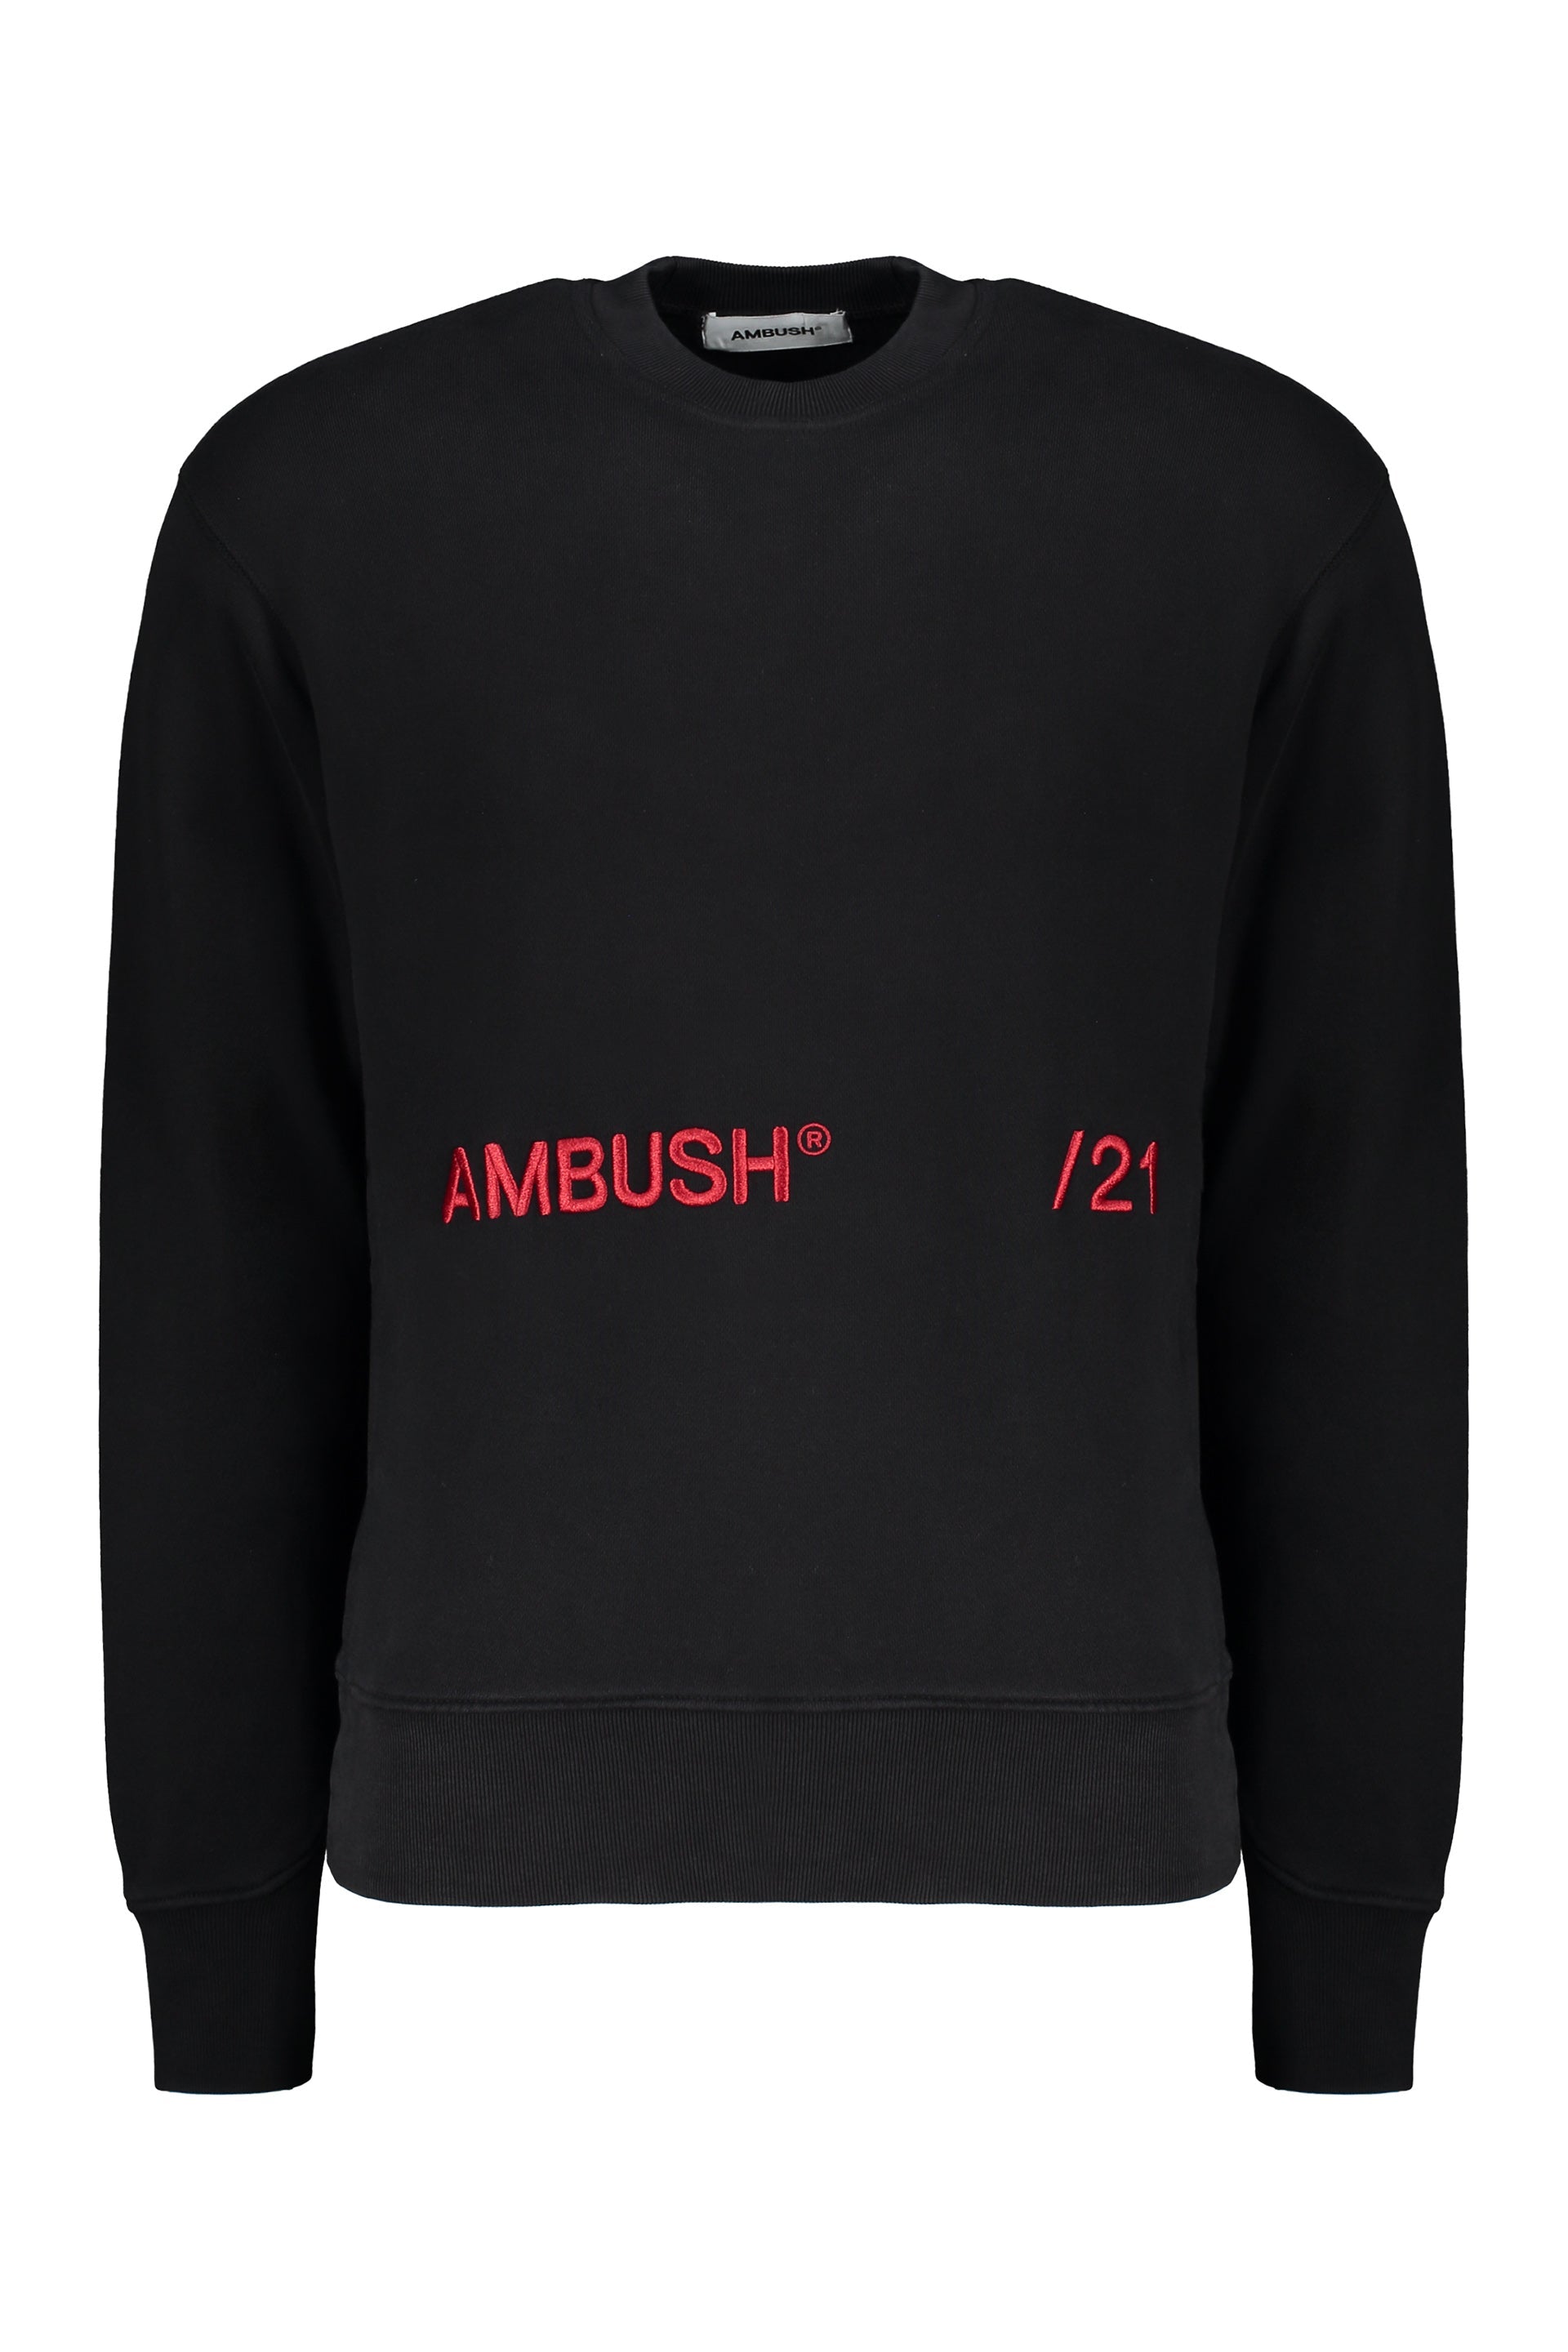 AMBUSH-OUTLET-SALE-Logo-embroidered-cotton-sweatshirt-Strick-XS-ARCHIVE-COLLECTION_d00e3feb-45b8-49c0-82a4-a60a088c5f45.jpg